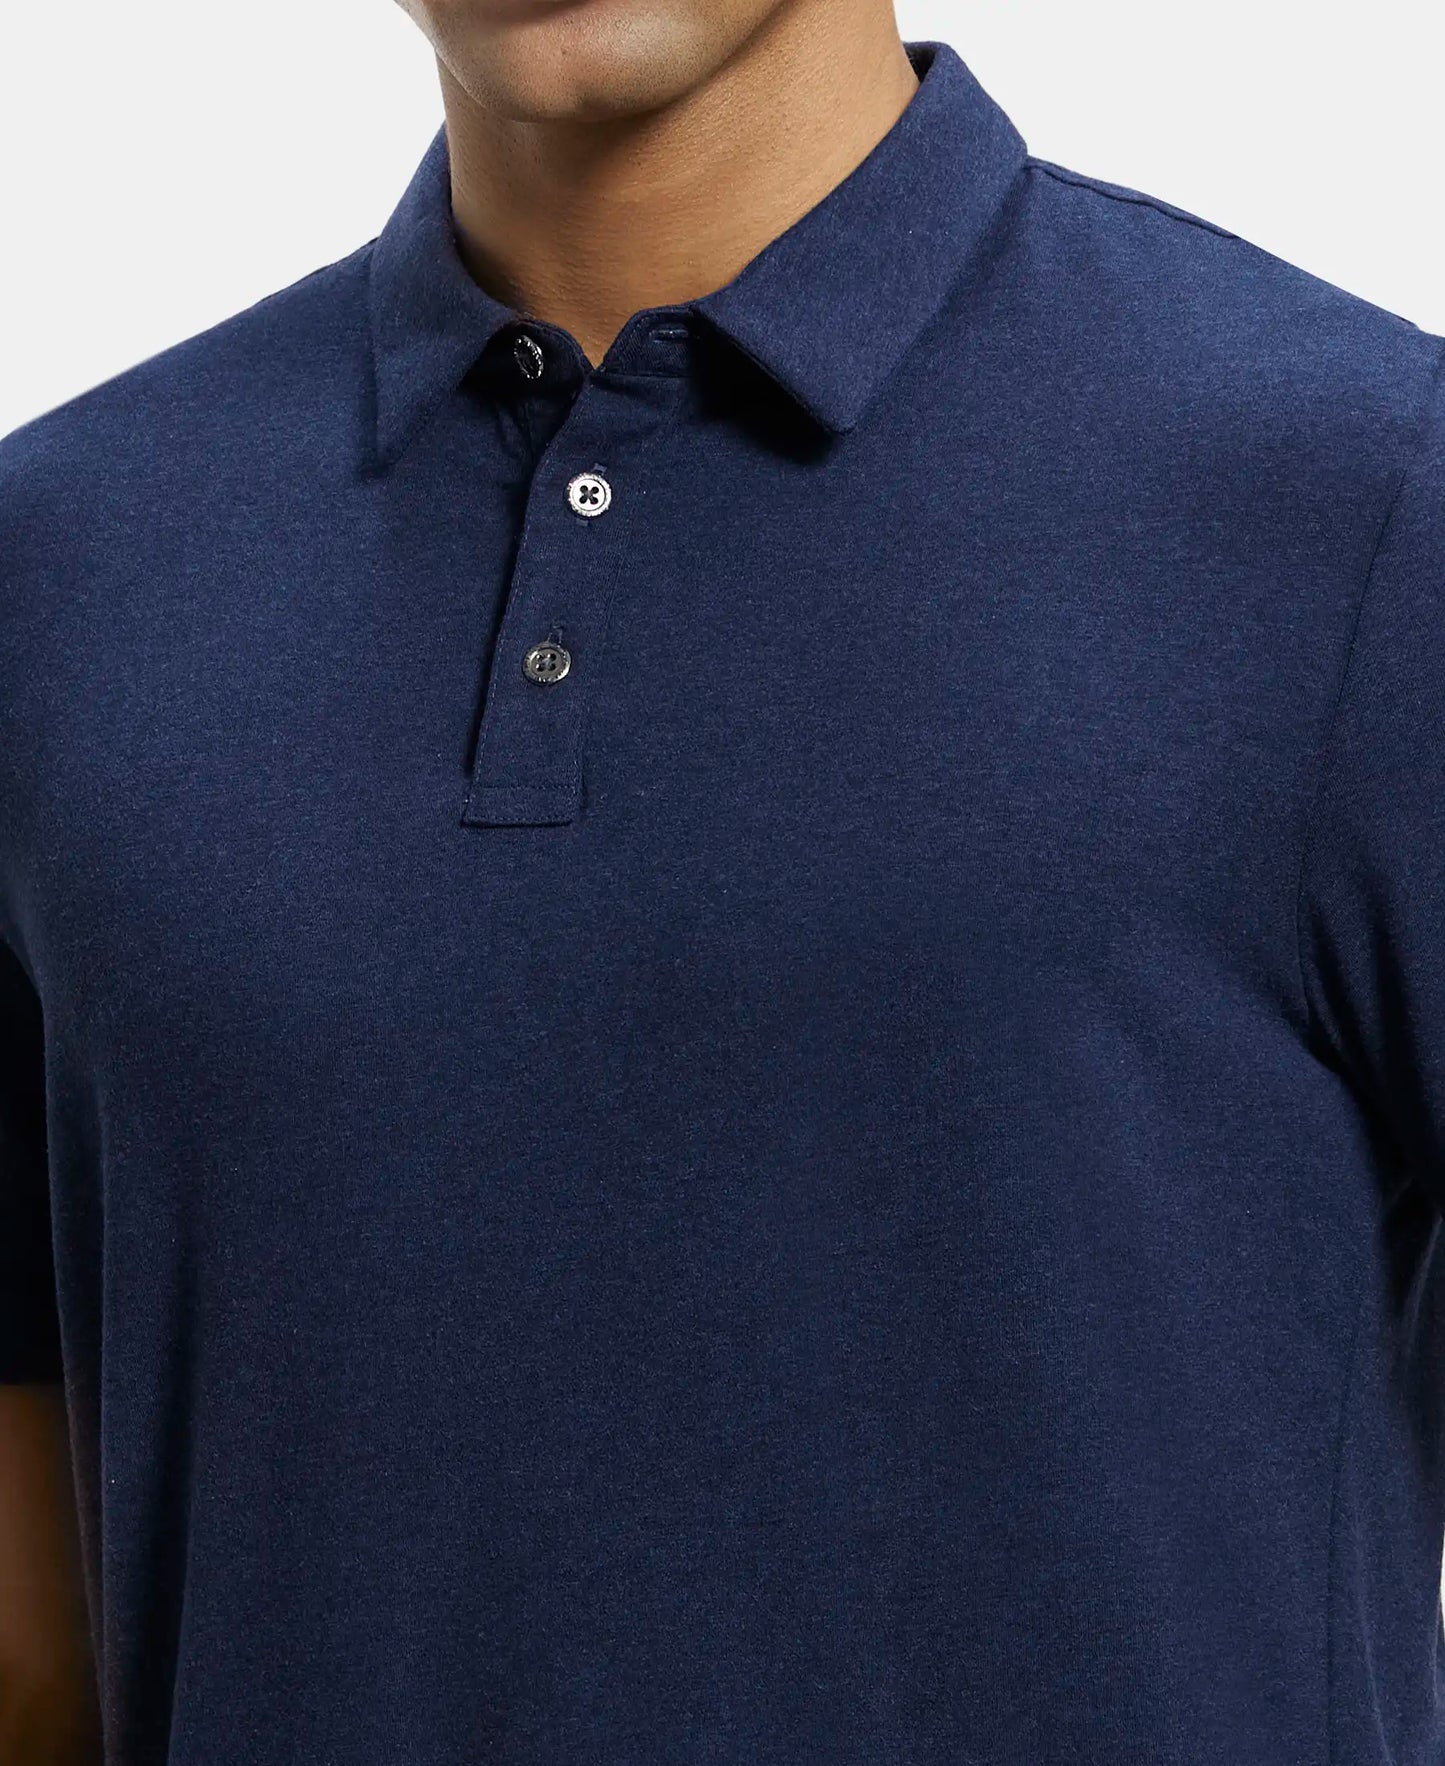 Tencel Micro Modal Supima Cotton Elastane Stretch Half Sleeve Polo T-Shirt - Ink Blue Melange-6